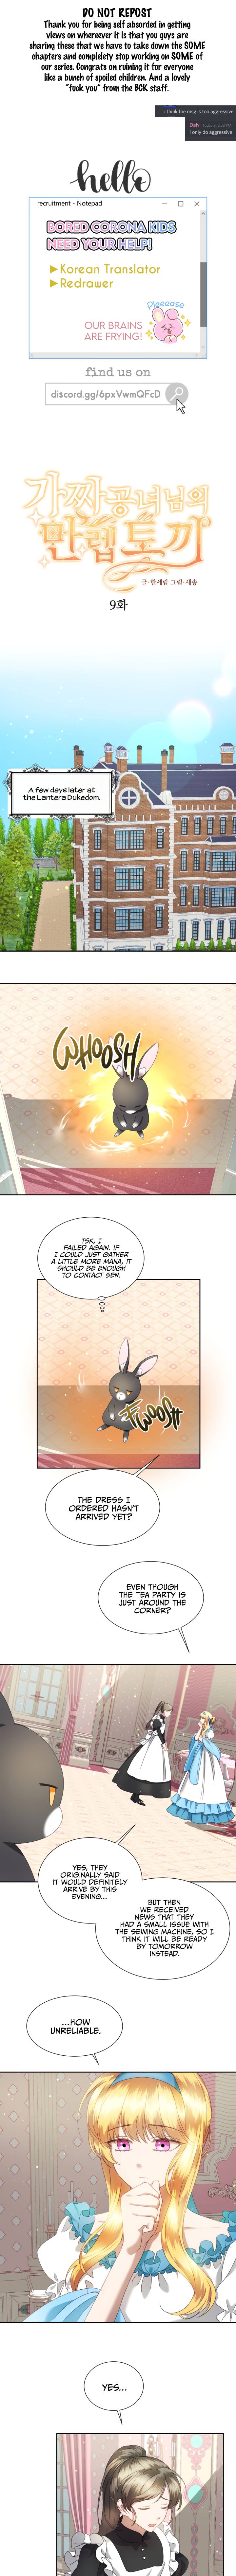 The Fake Princess’ Op Bunny - Page 1